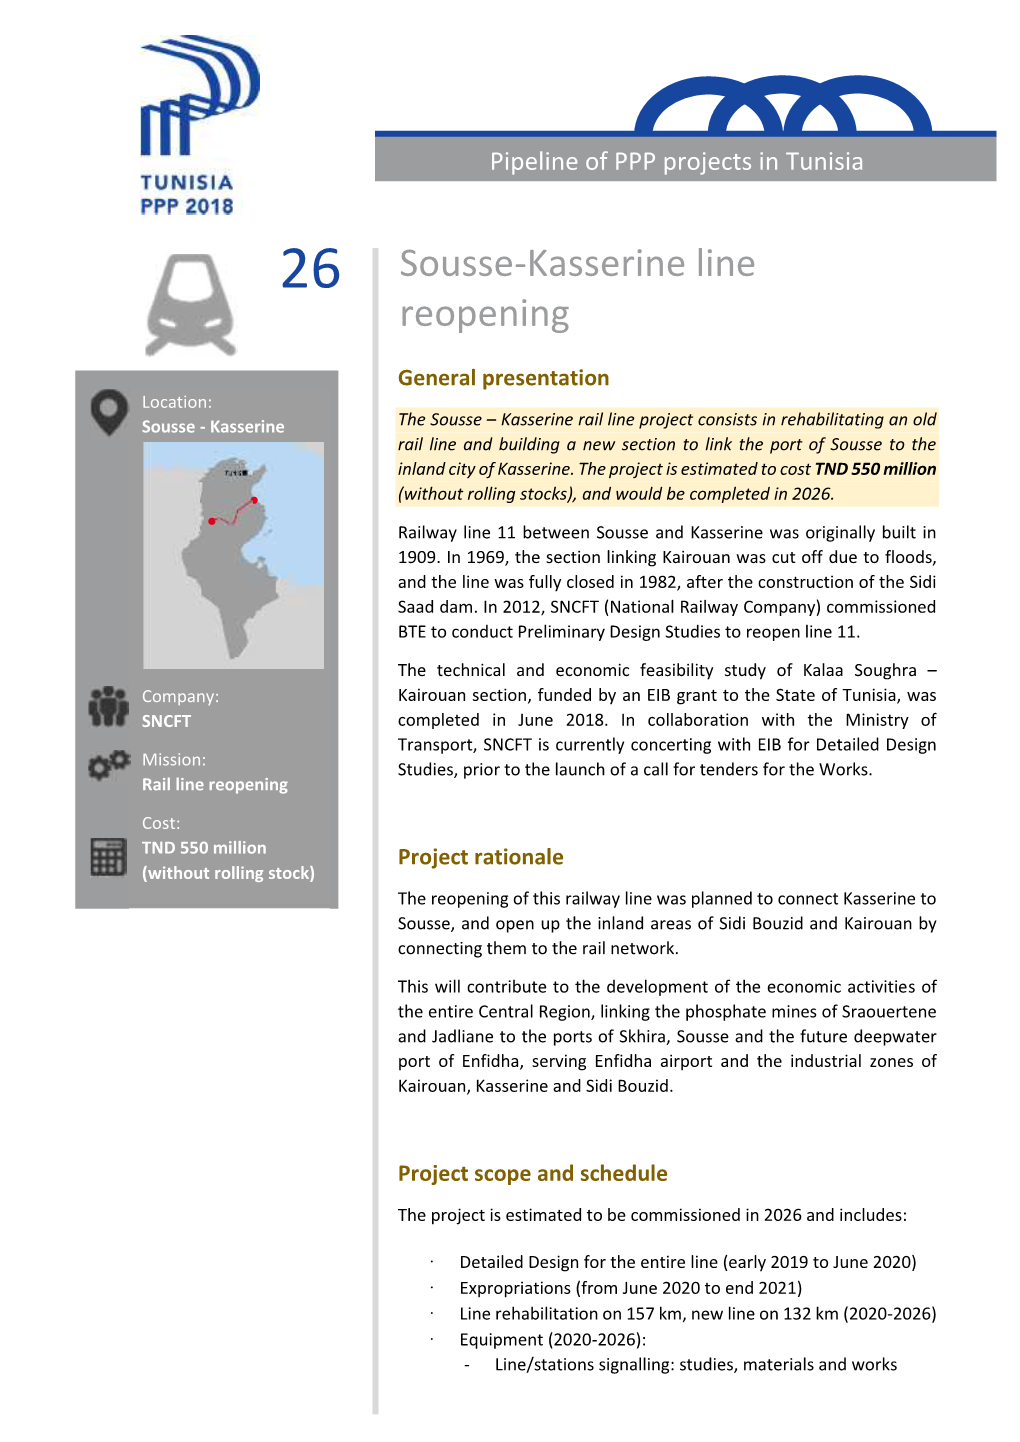 26 Sousse-Kasserine Line Reopening